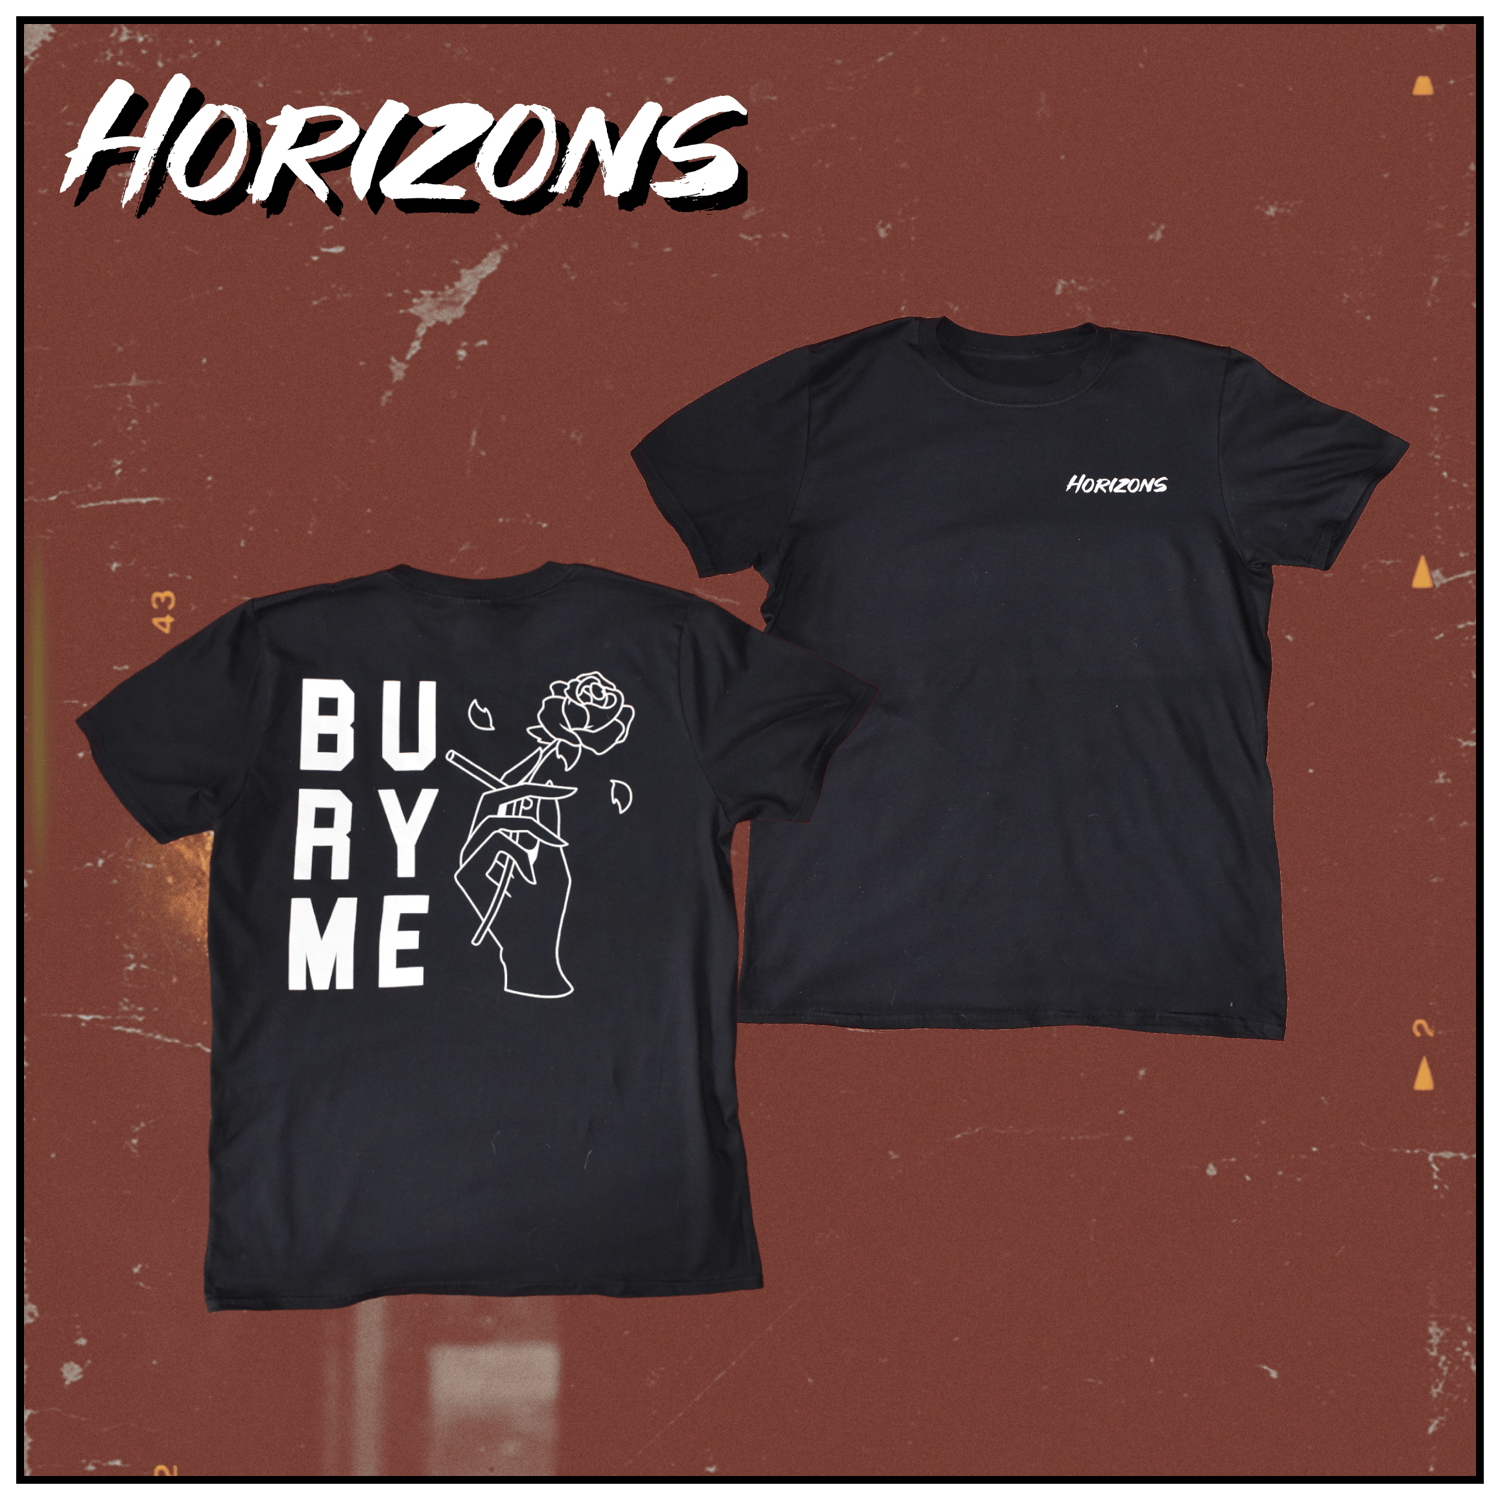 BURY ME - T-Shirt